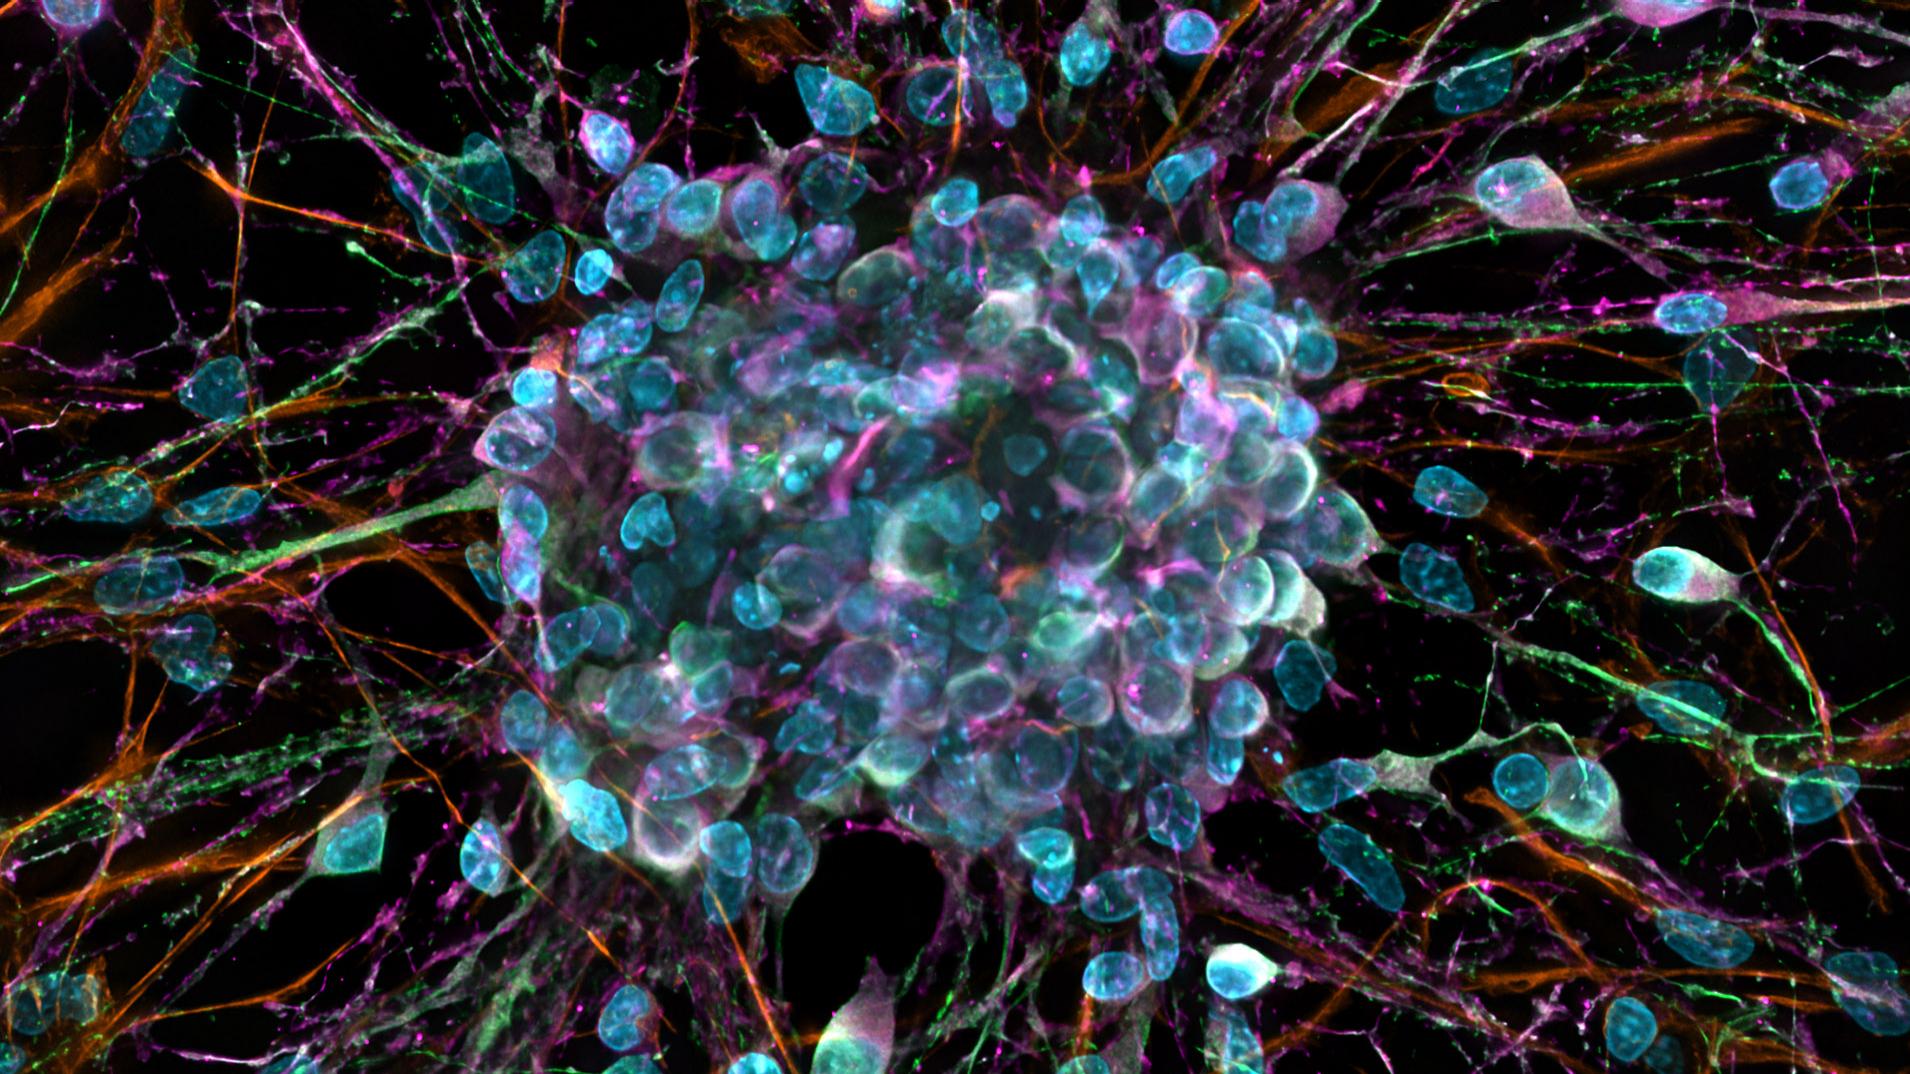 Neurospheres. Sample courtesy of H. Braun, LSM Bioanalytik GmbH, Magdeburg, Germany.